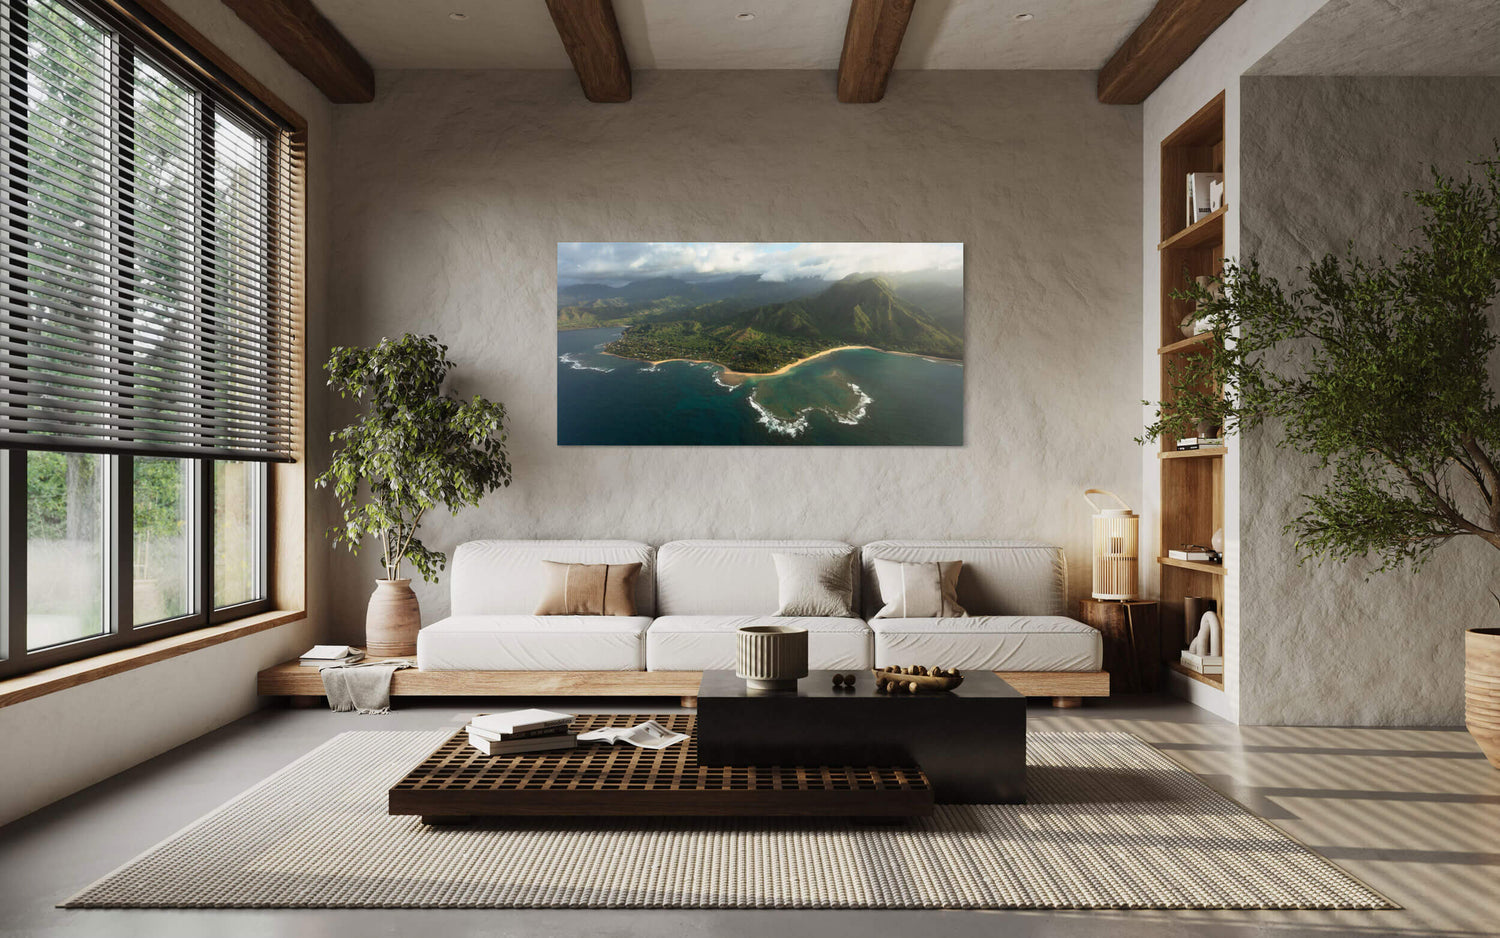 A piece of Napali Coast art showing a Ke'e Beach picture from Kauai hangs in a living room.